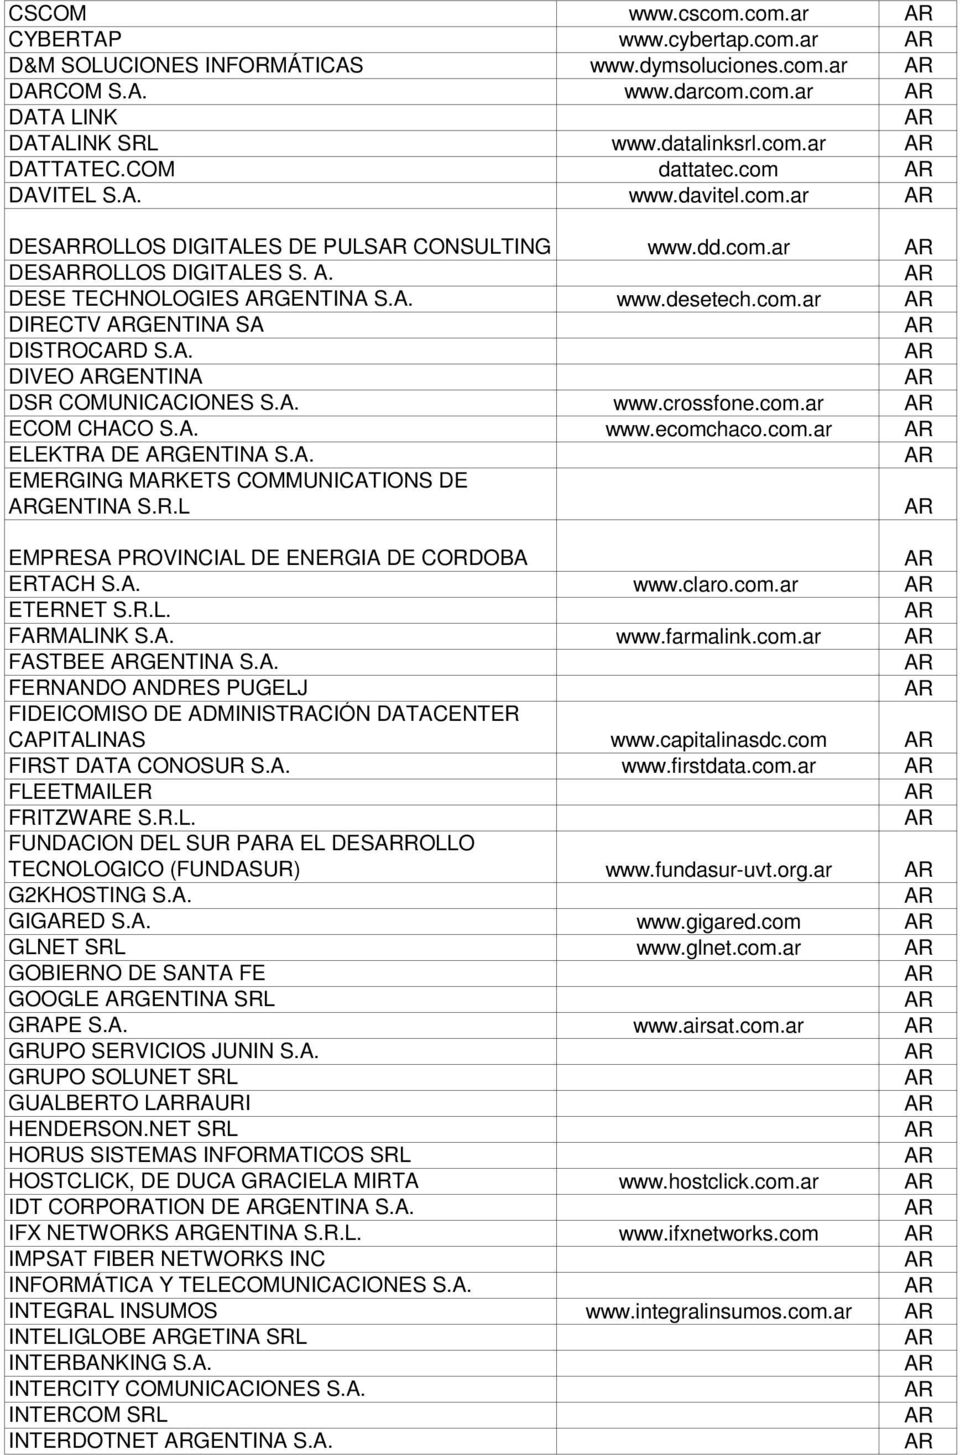 A. www.crossfone.com.ar EM CHA S.A. www.ecomchaco.com.ar ELEKTRA DE GENTINA S.A. EMERGING MKETS MMUNICATIONS DE GENTINA S.R.L EMPRESA PROVINCIAL DE ENERGIA DE RDOBA ERTACH S.A. www.claro.com.ar ETERNET S.